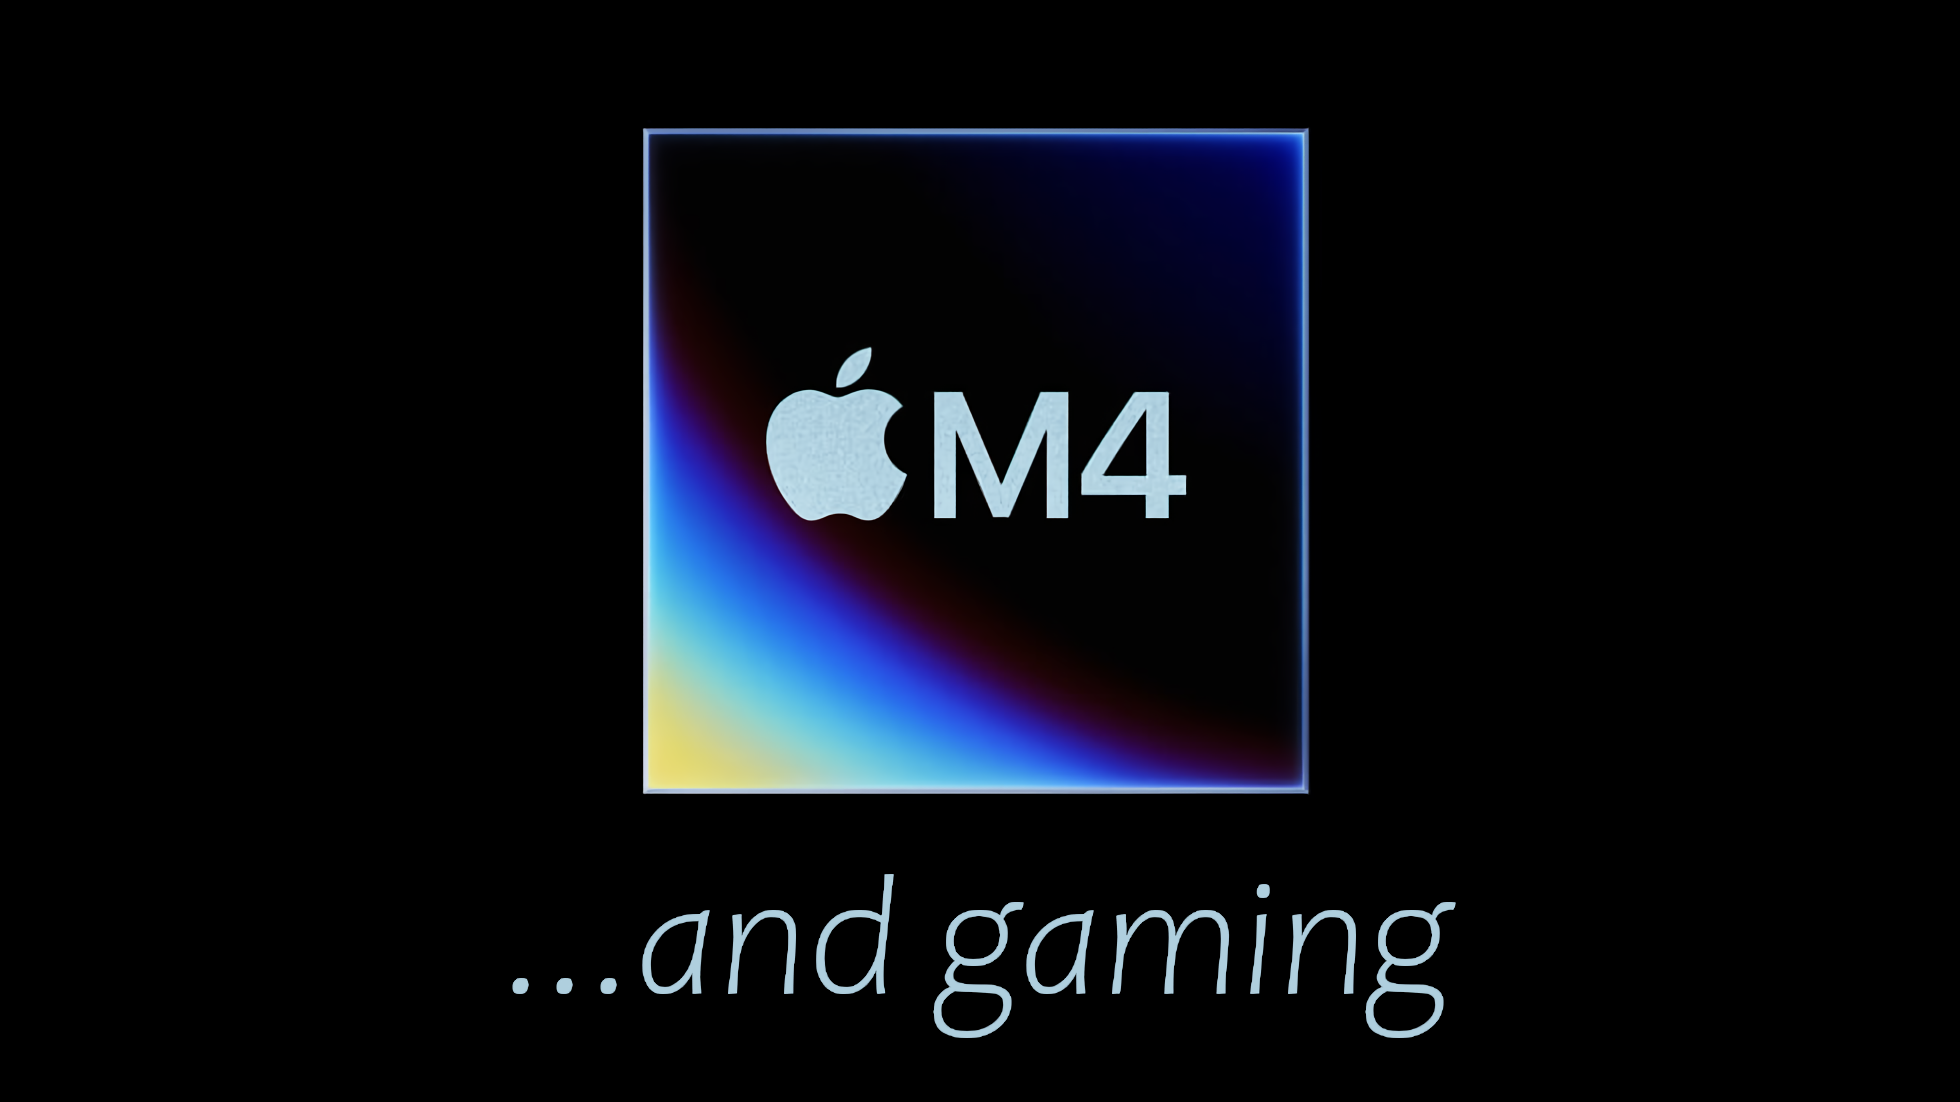 can mac m4 run games? gaming on m4 mac